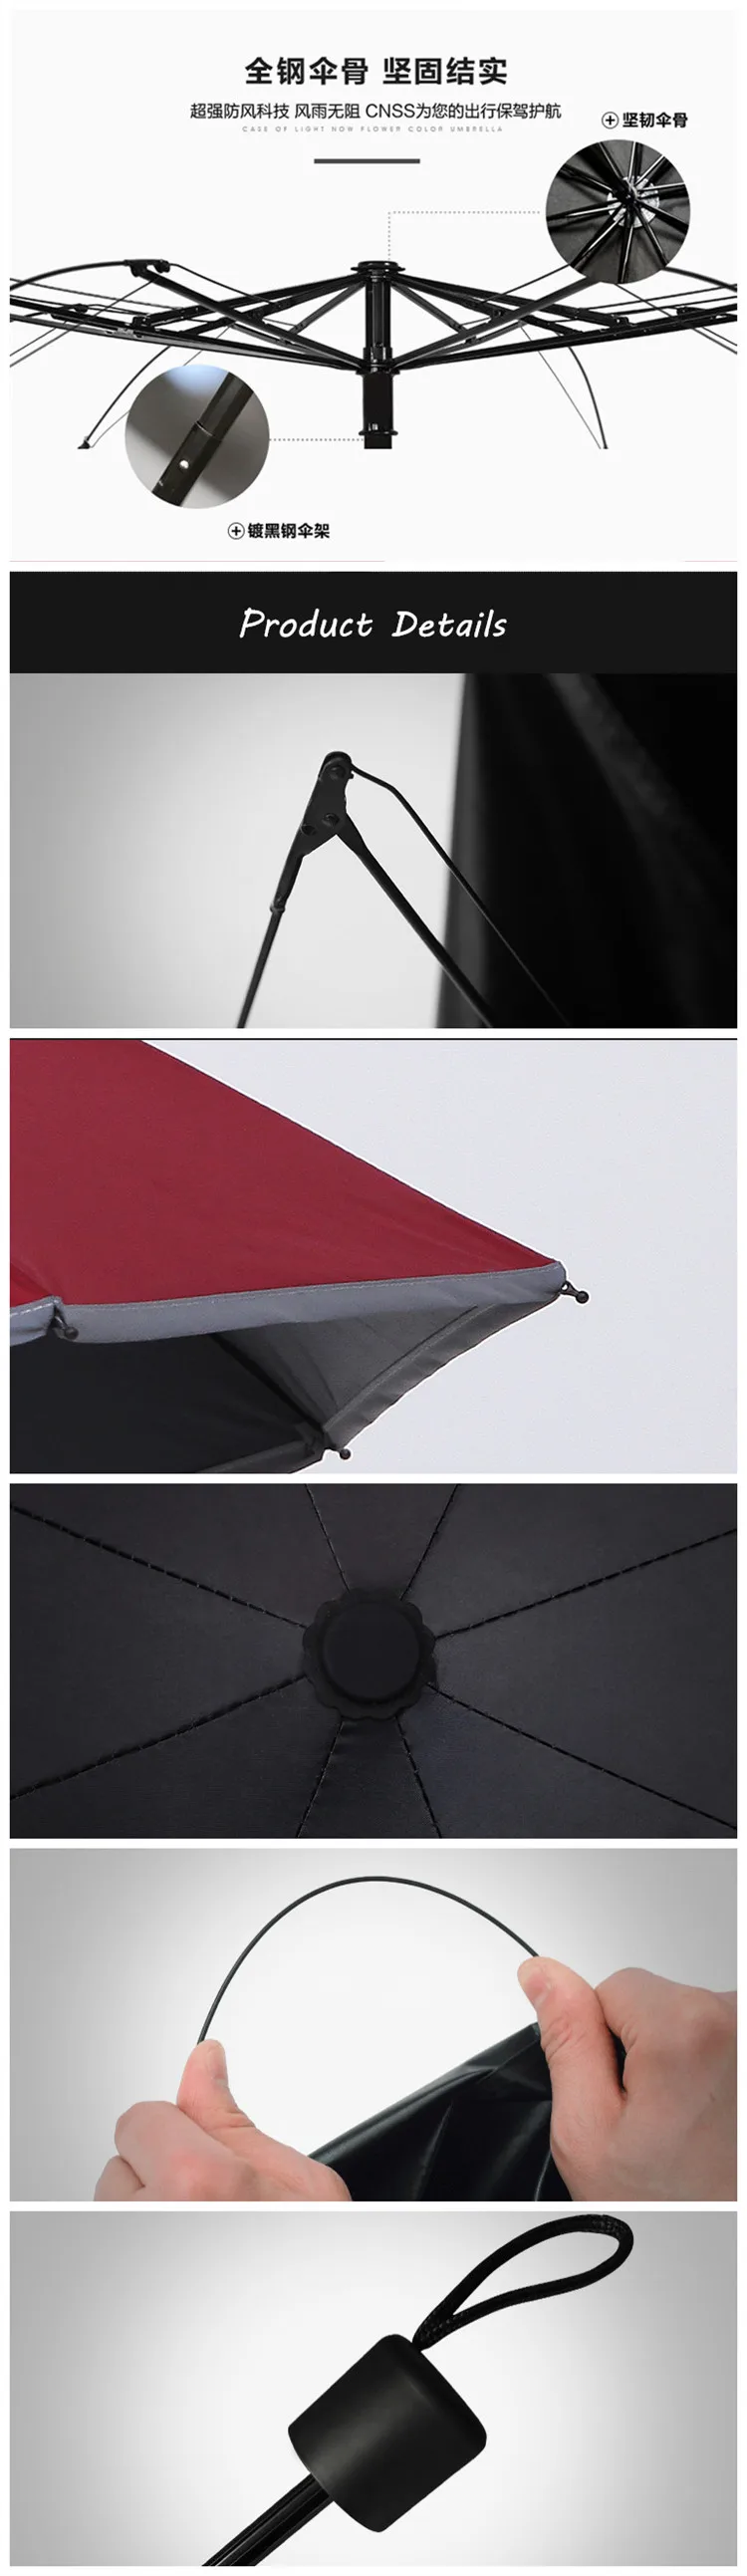 safety umbrella